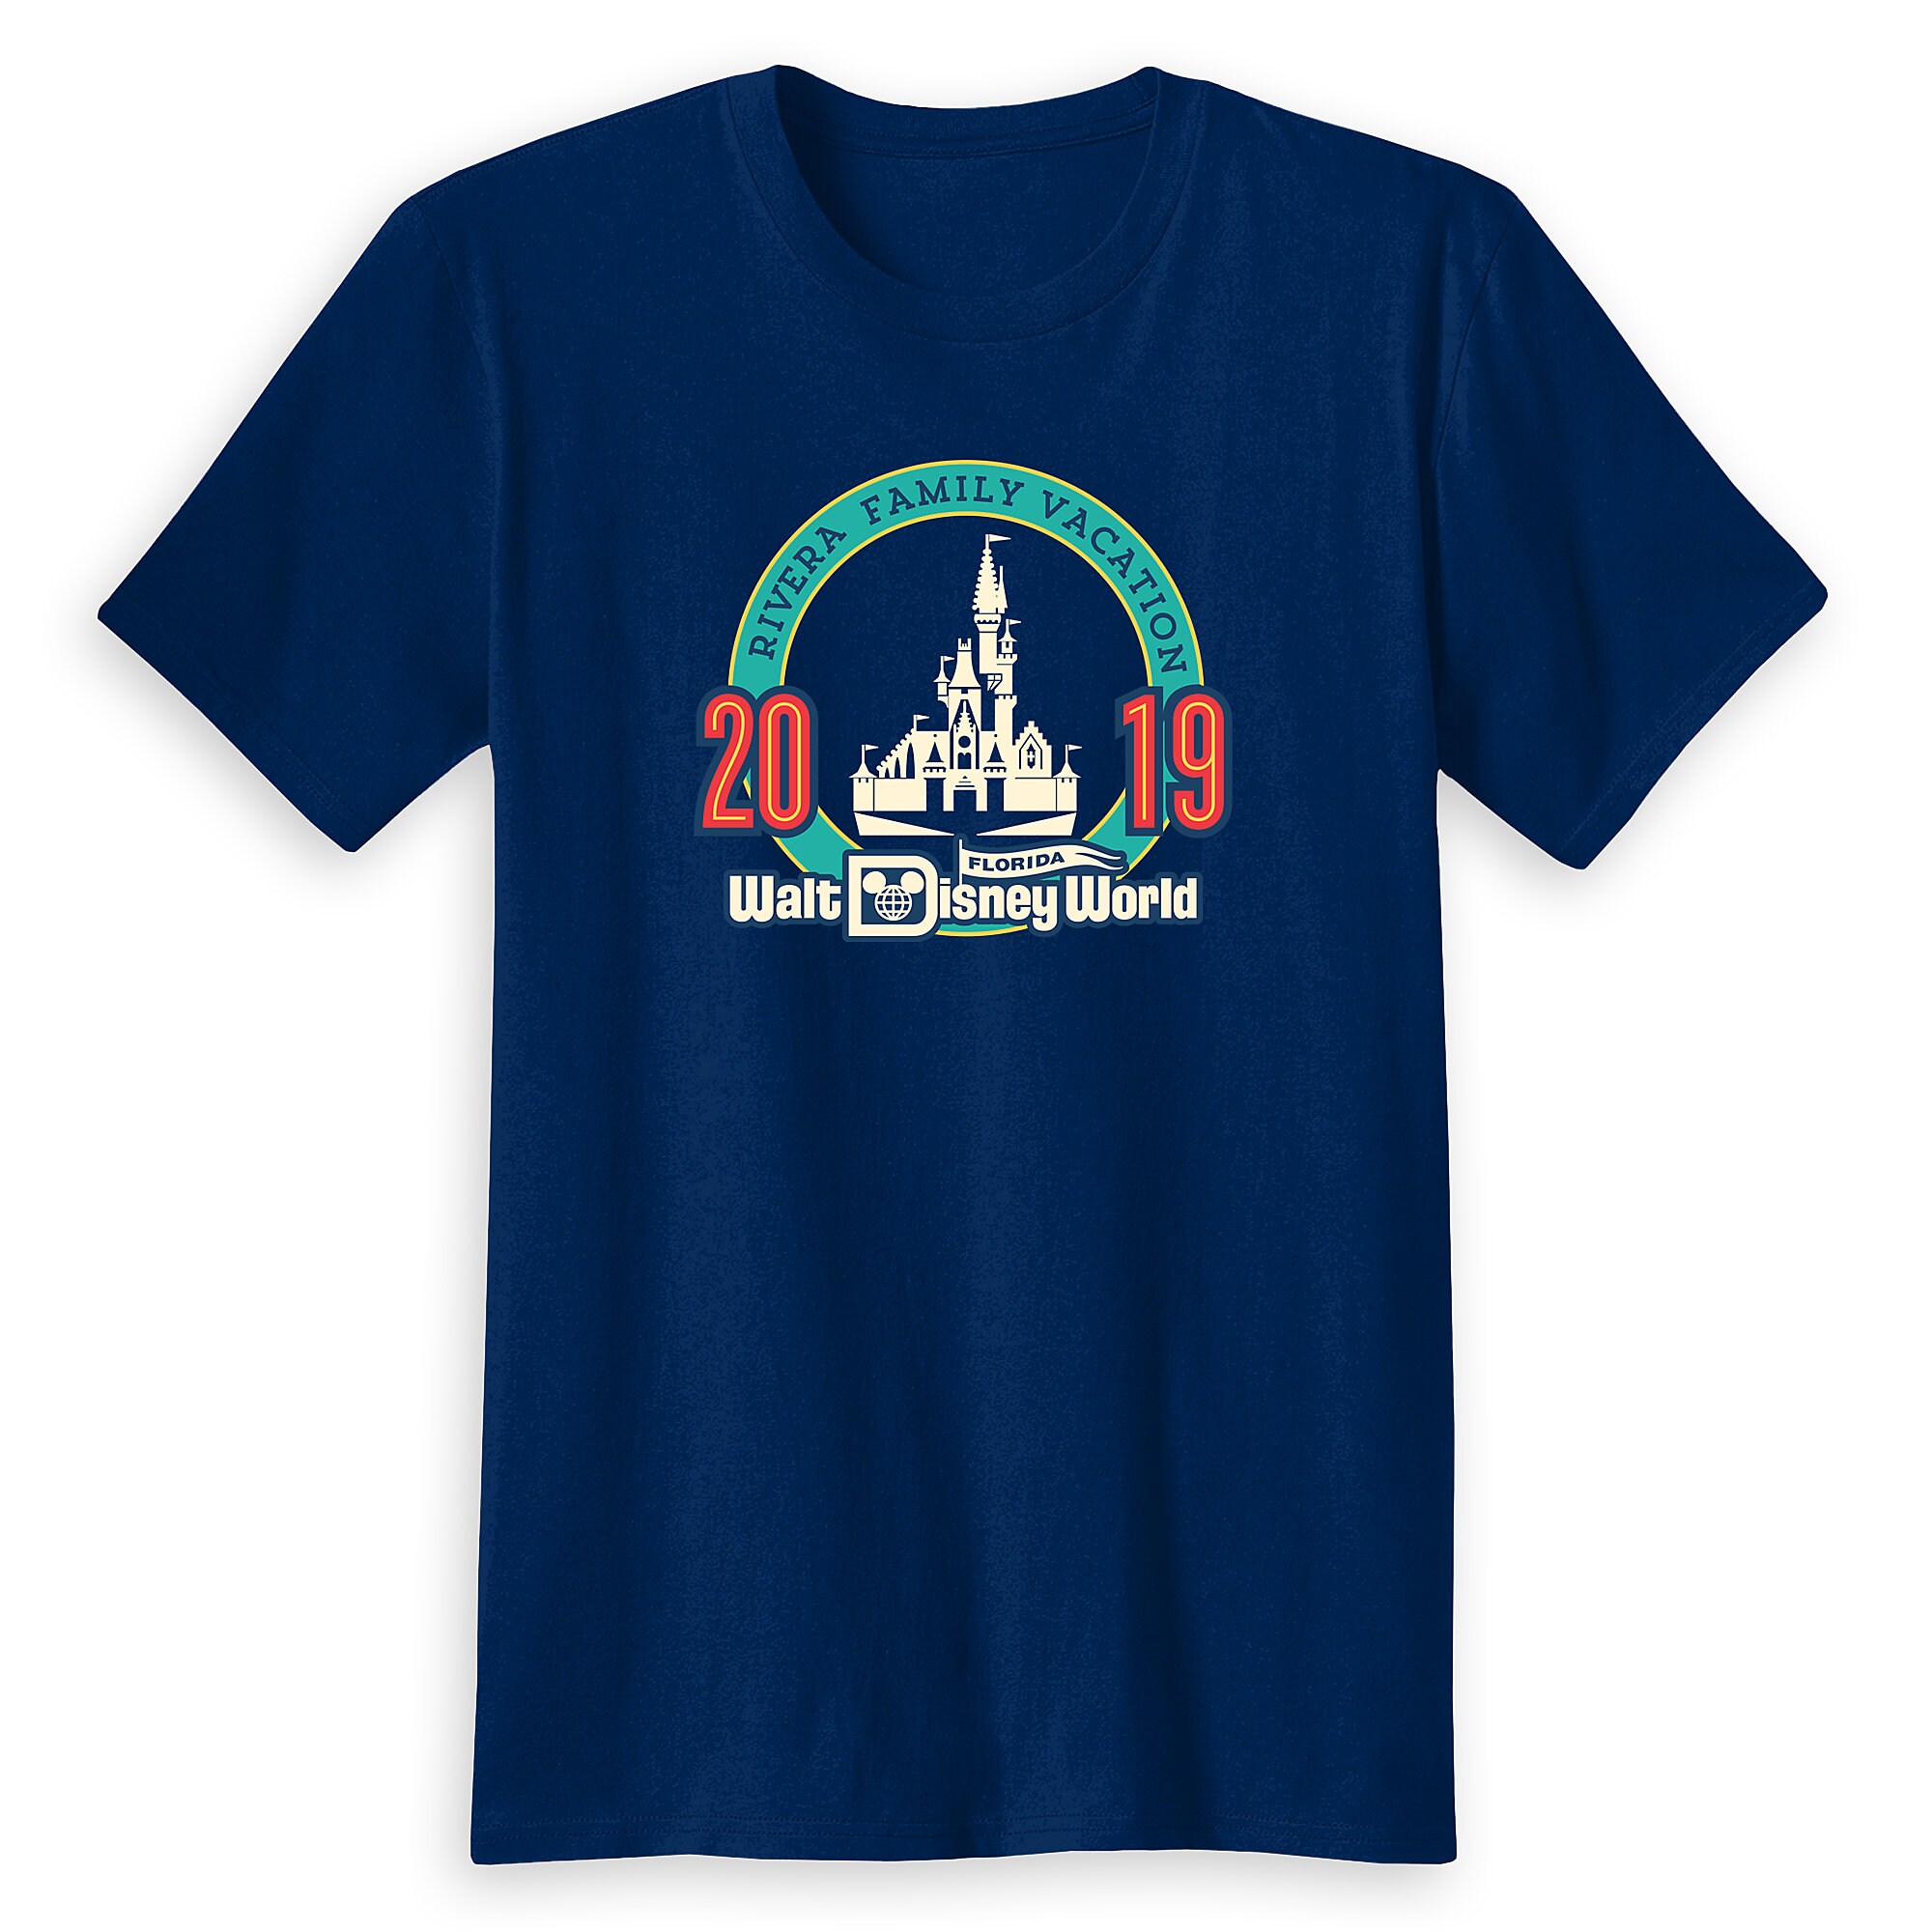 Adults' Cinderella Castle Family Vacation T-Shirt - Walt Disney World - 2019 - Customized